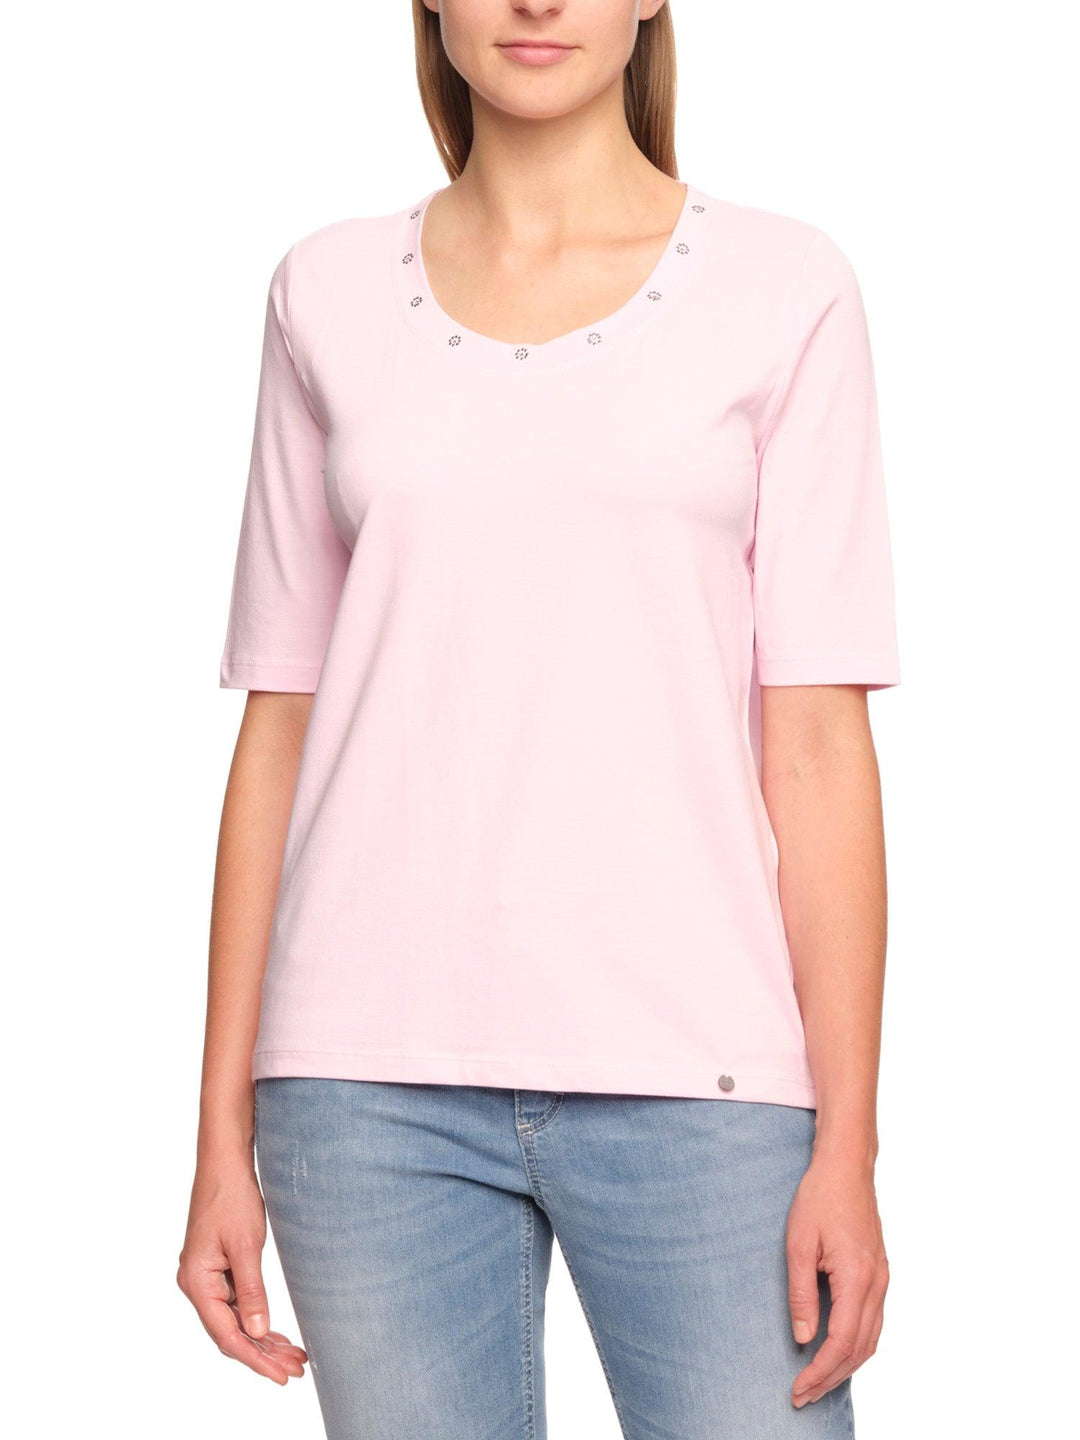 Gollehaug T-Shirt - Style 02311-23230-431 - Flamingo, New, SS23, T-Shirt, Top ginasmartboutique